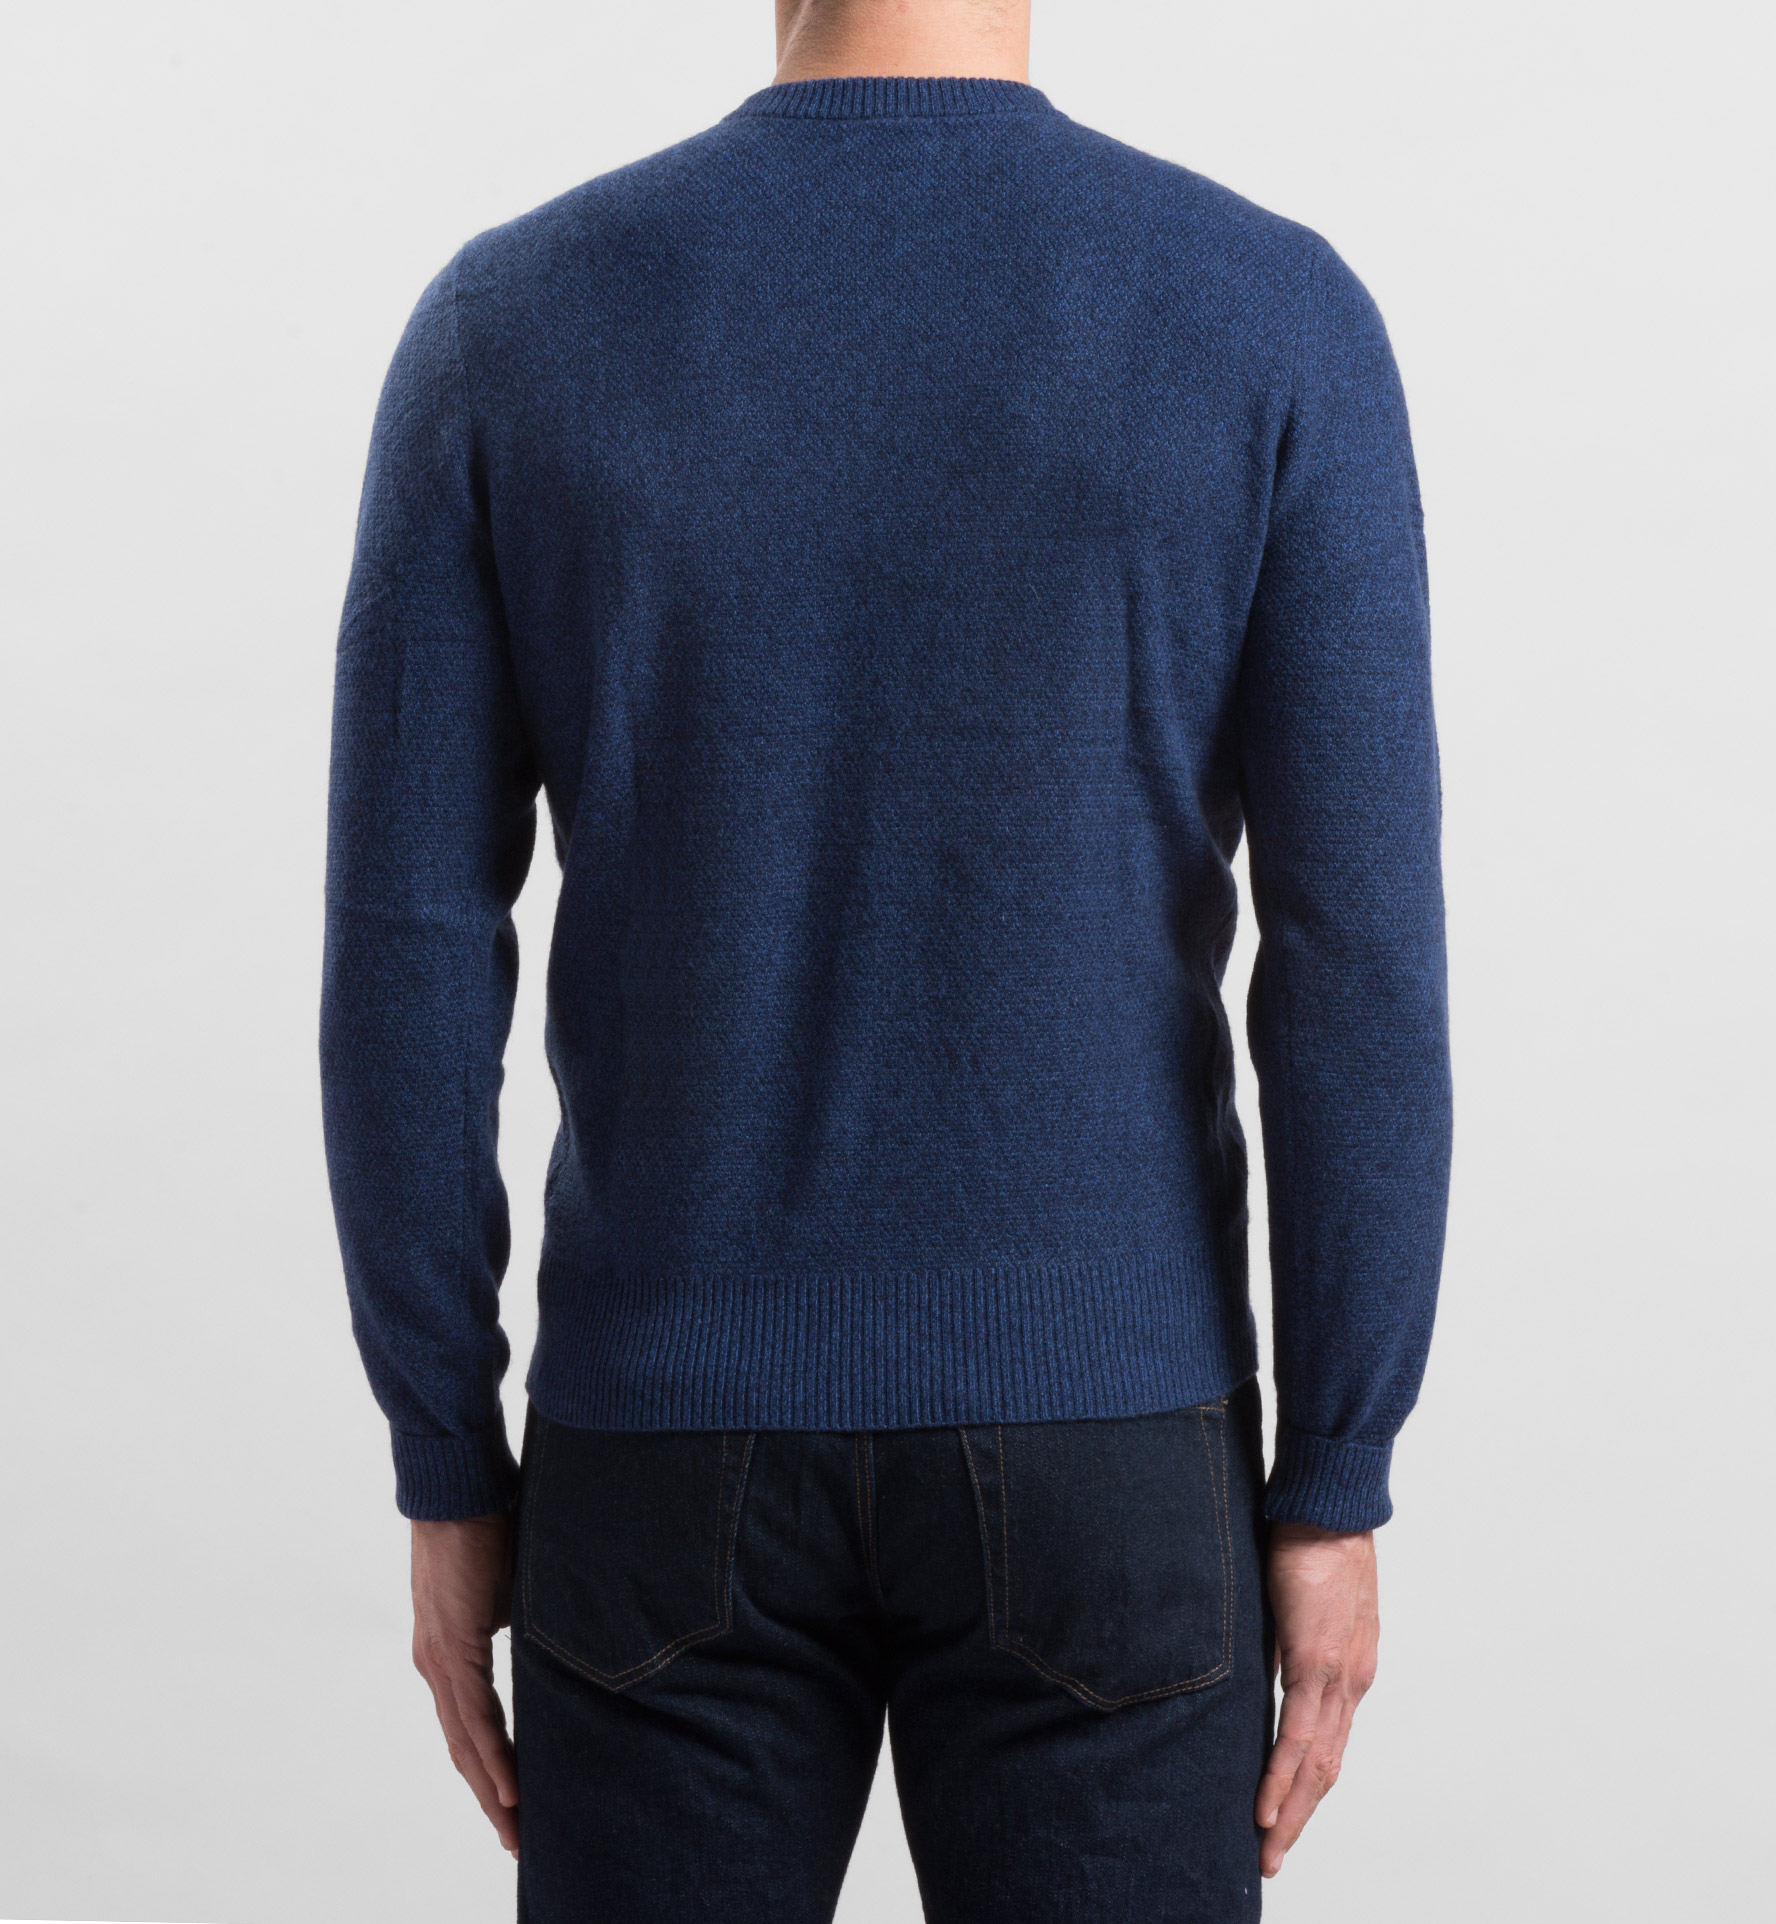 Indigo Cobble Stitch Cashmere Sweater by Proper Cloth